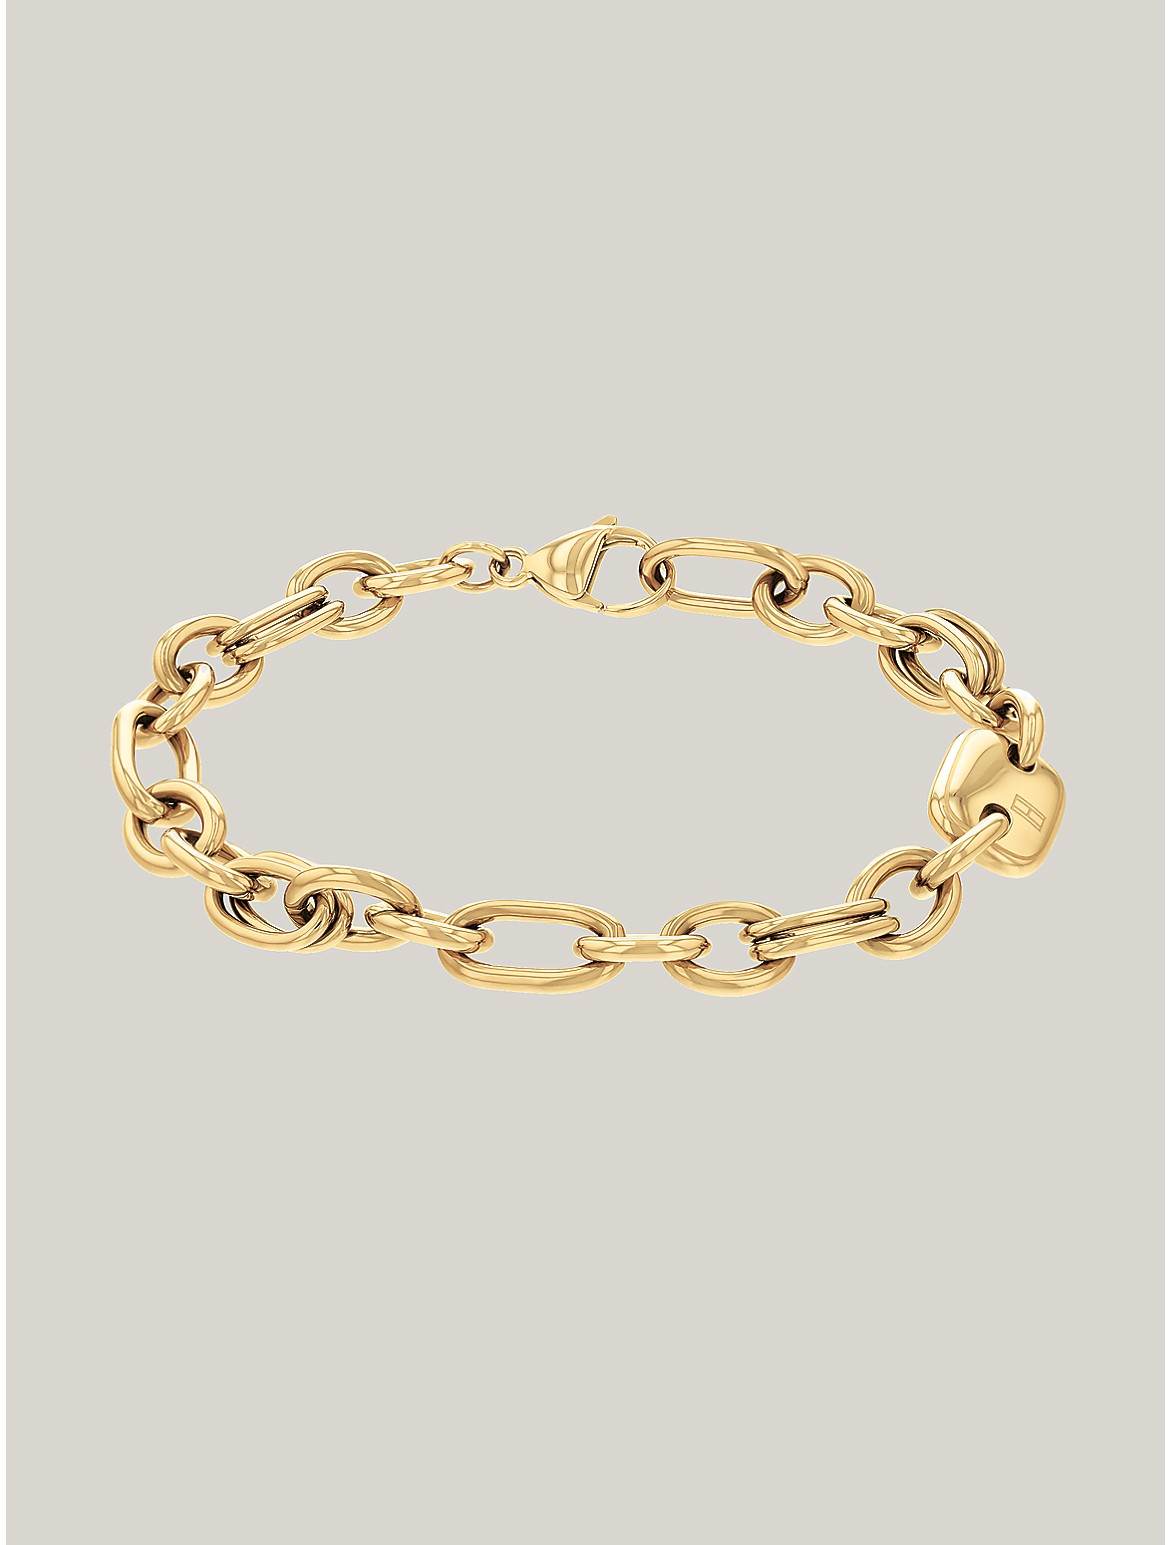 Tommy Hilfiger Women's Mixed Chain Link Gold-Tone Bracelet